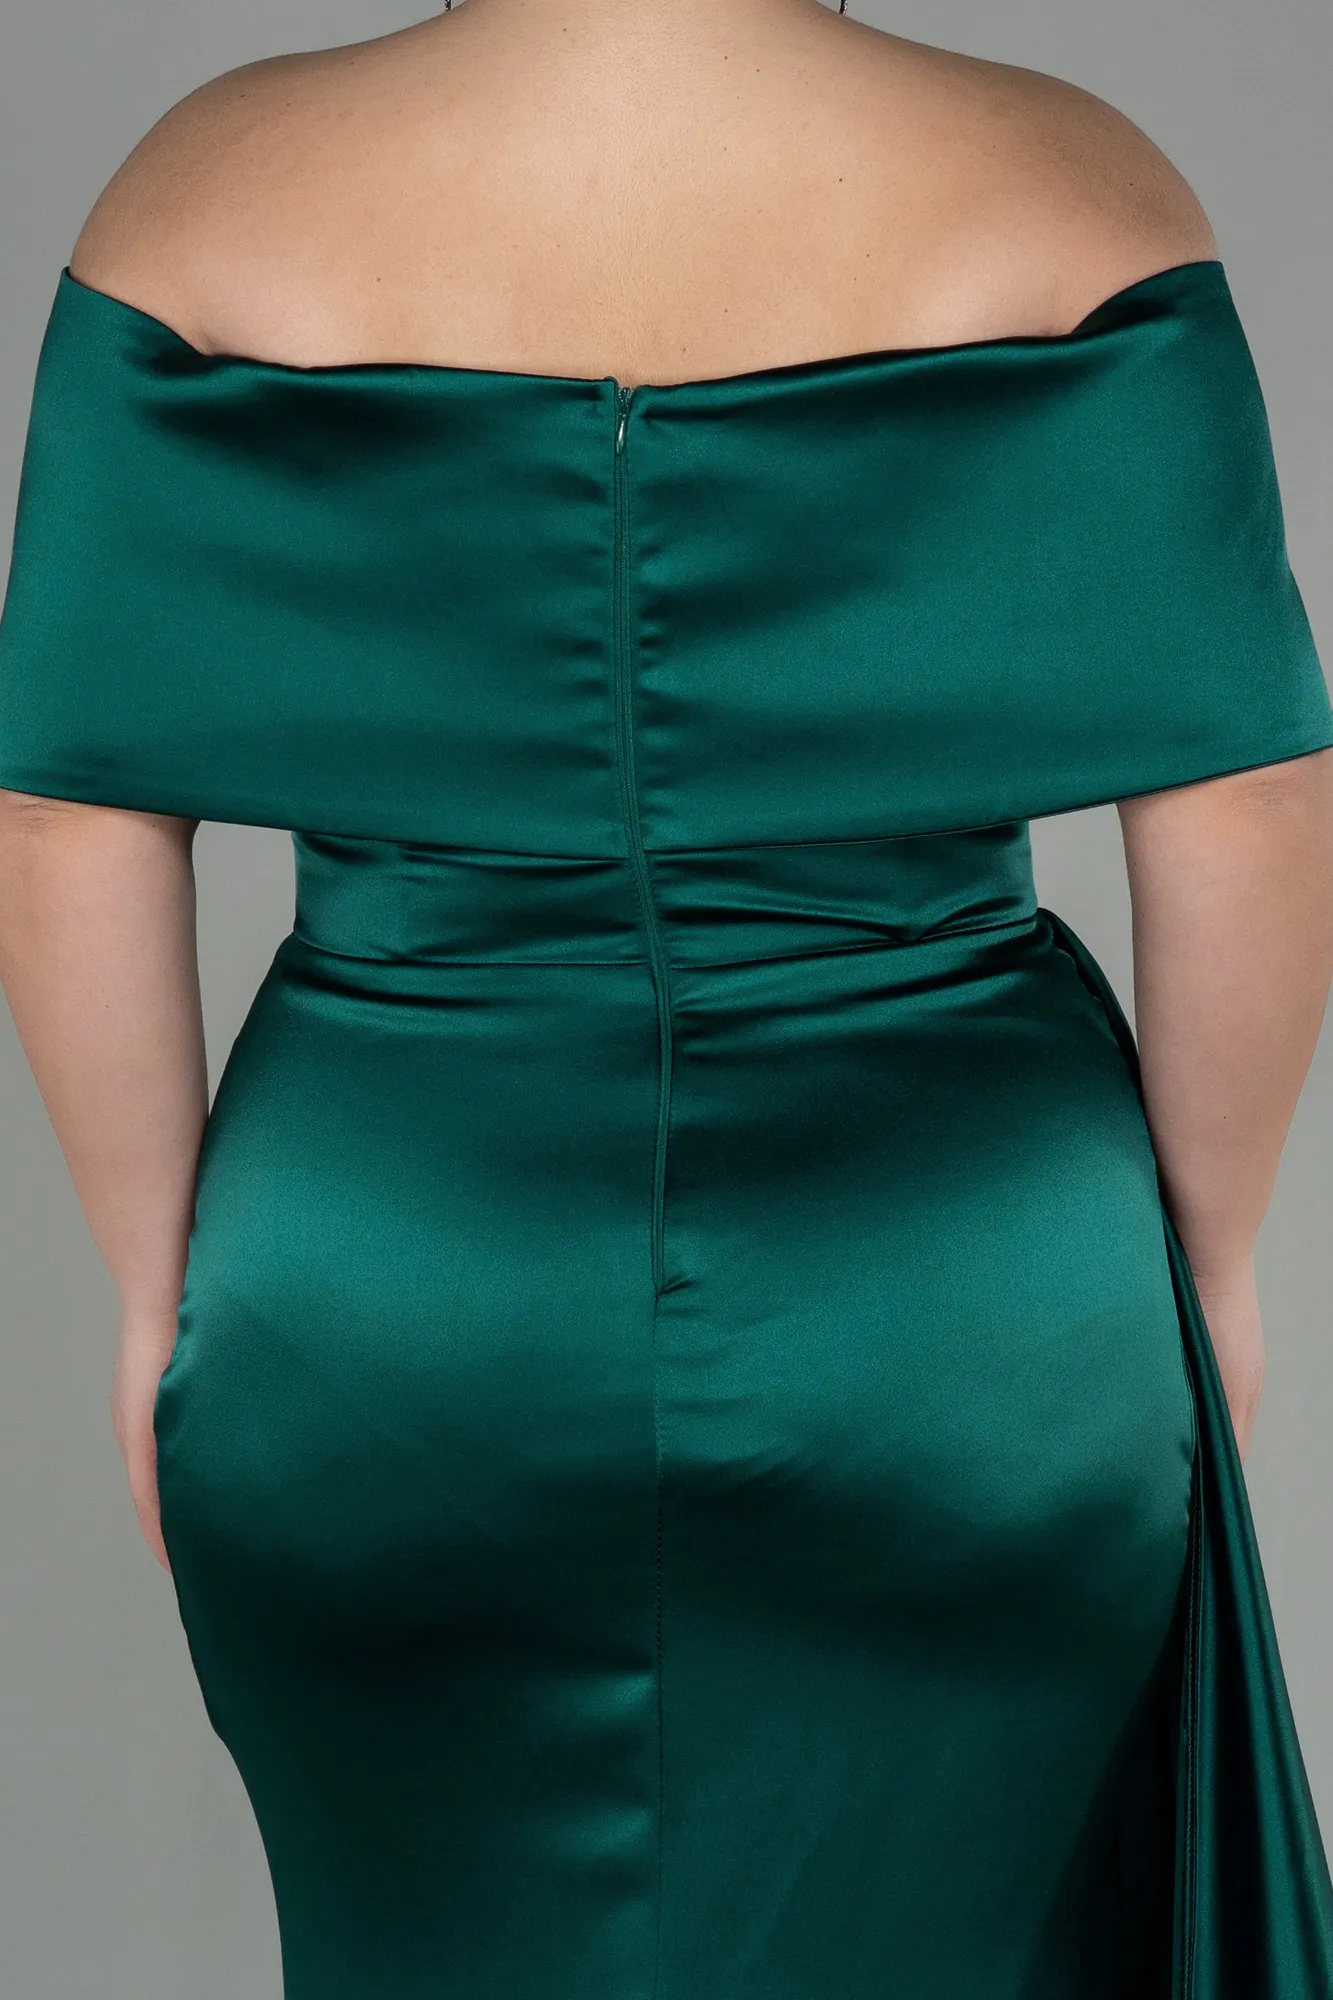 Emerald Green-Long Satin Plus Size Evening Dress ABU2873